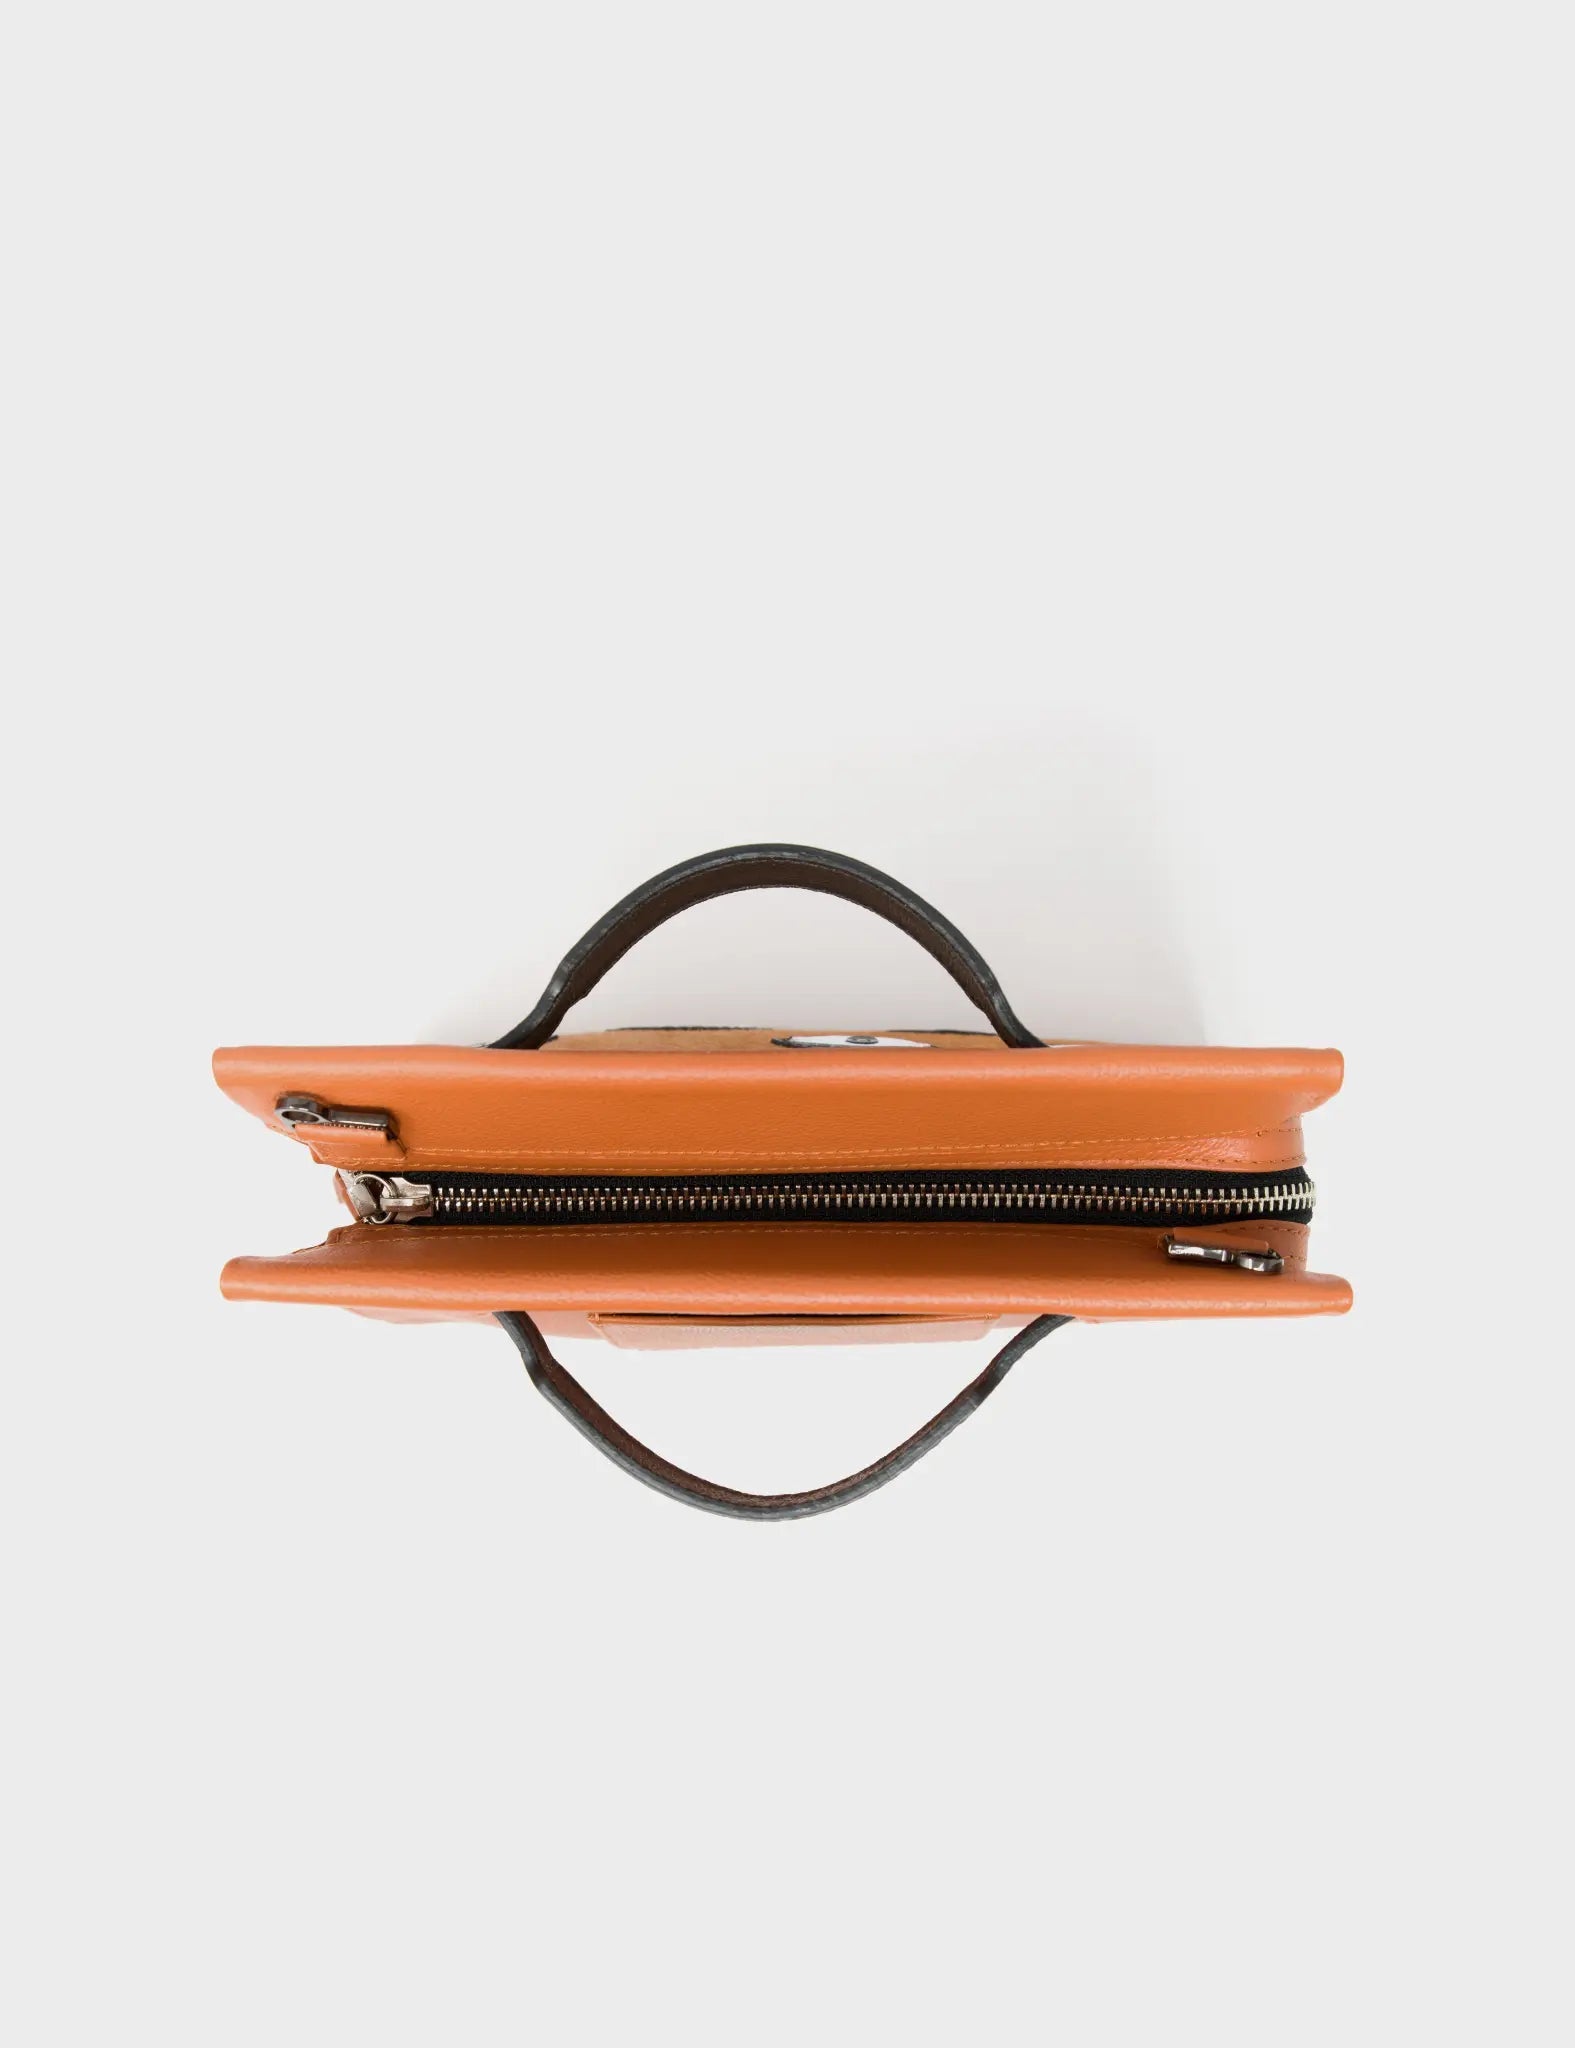 Vali Crossbody Small Caramel Leather Bag - Eyes Applique Adjustable Handle - Top view